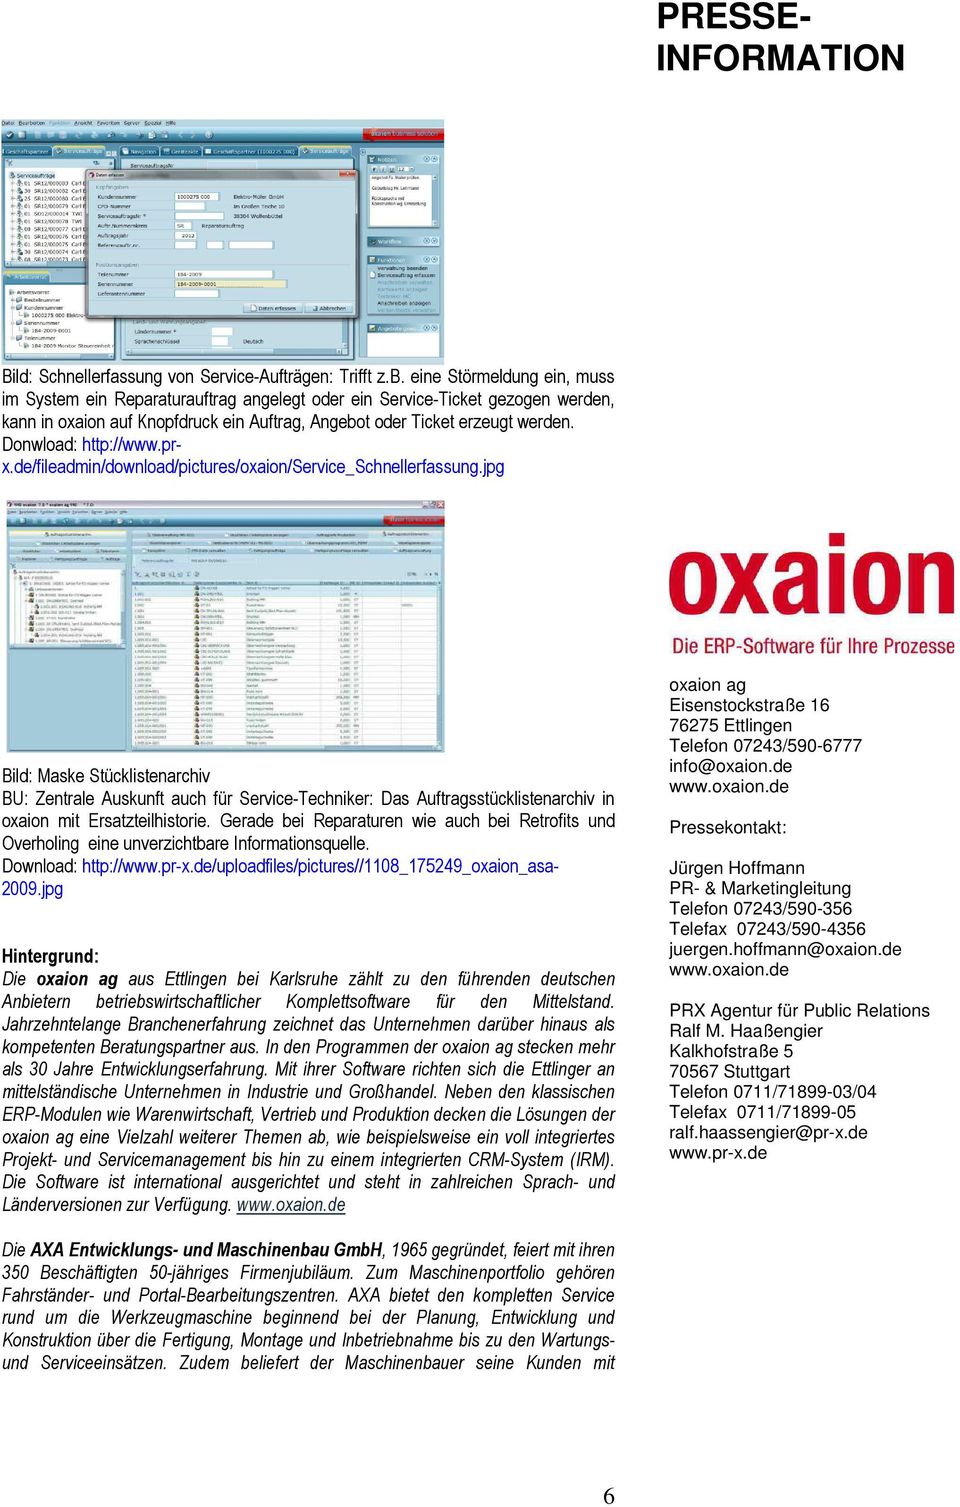 Donwload: http://www.prx.de/fileadmin/download/pictures/oxaion/service_schnellerfassung.